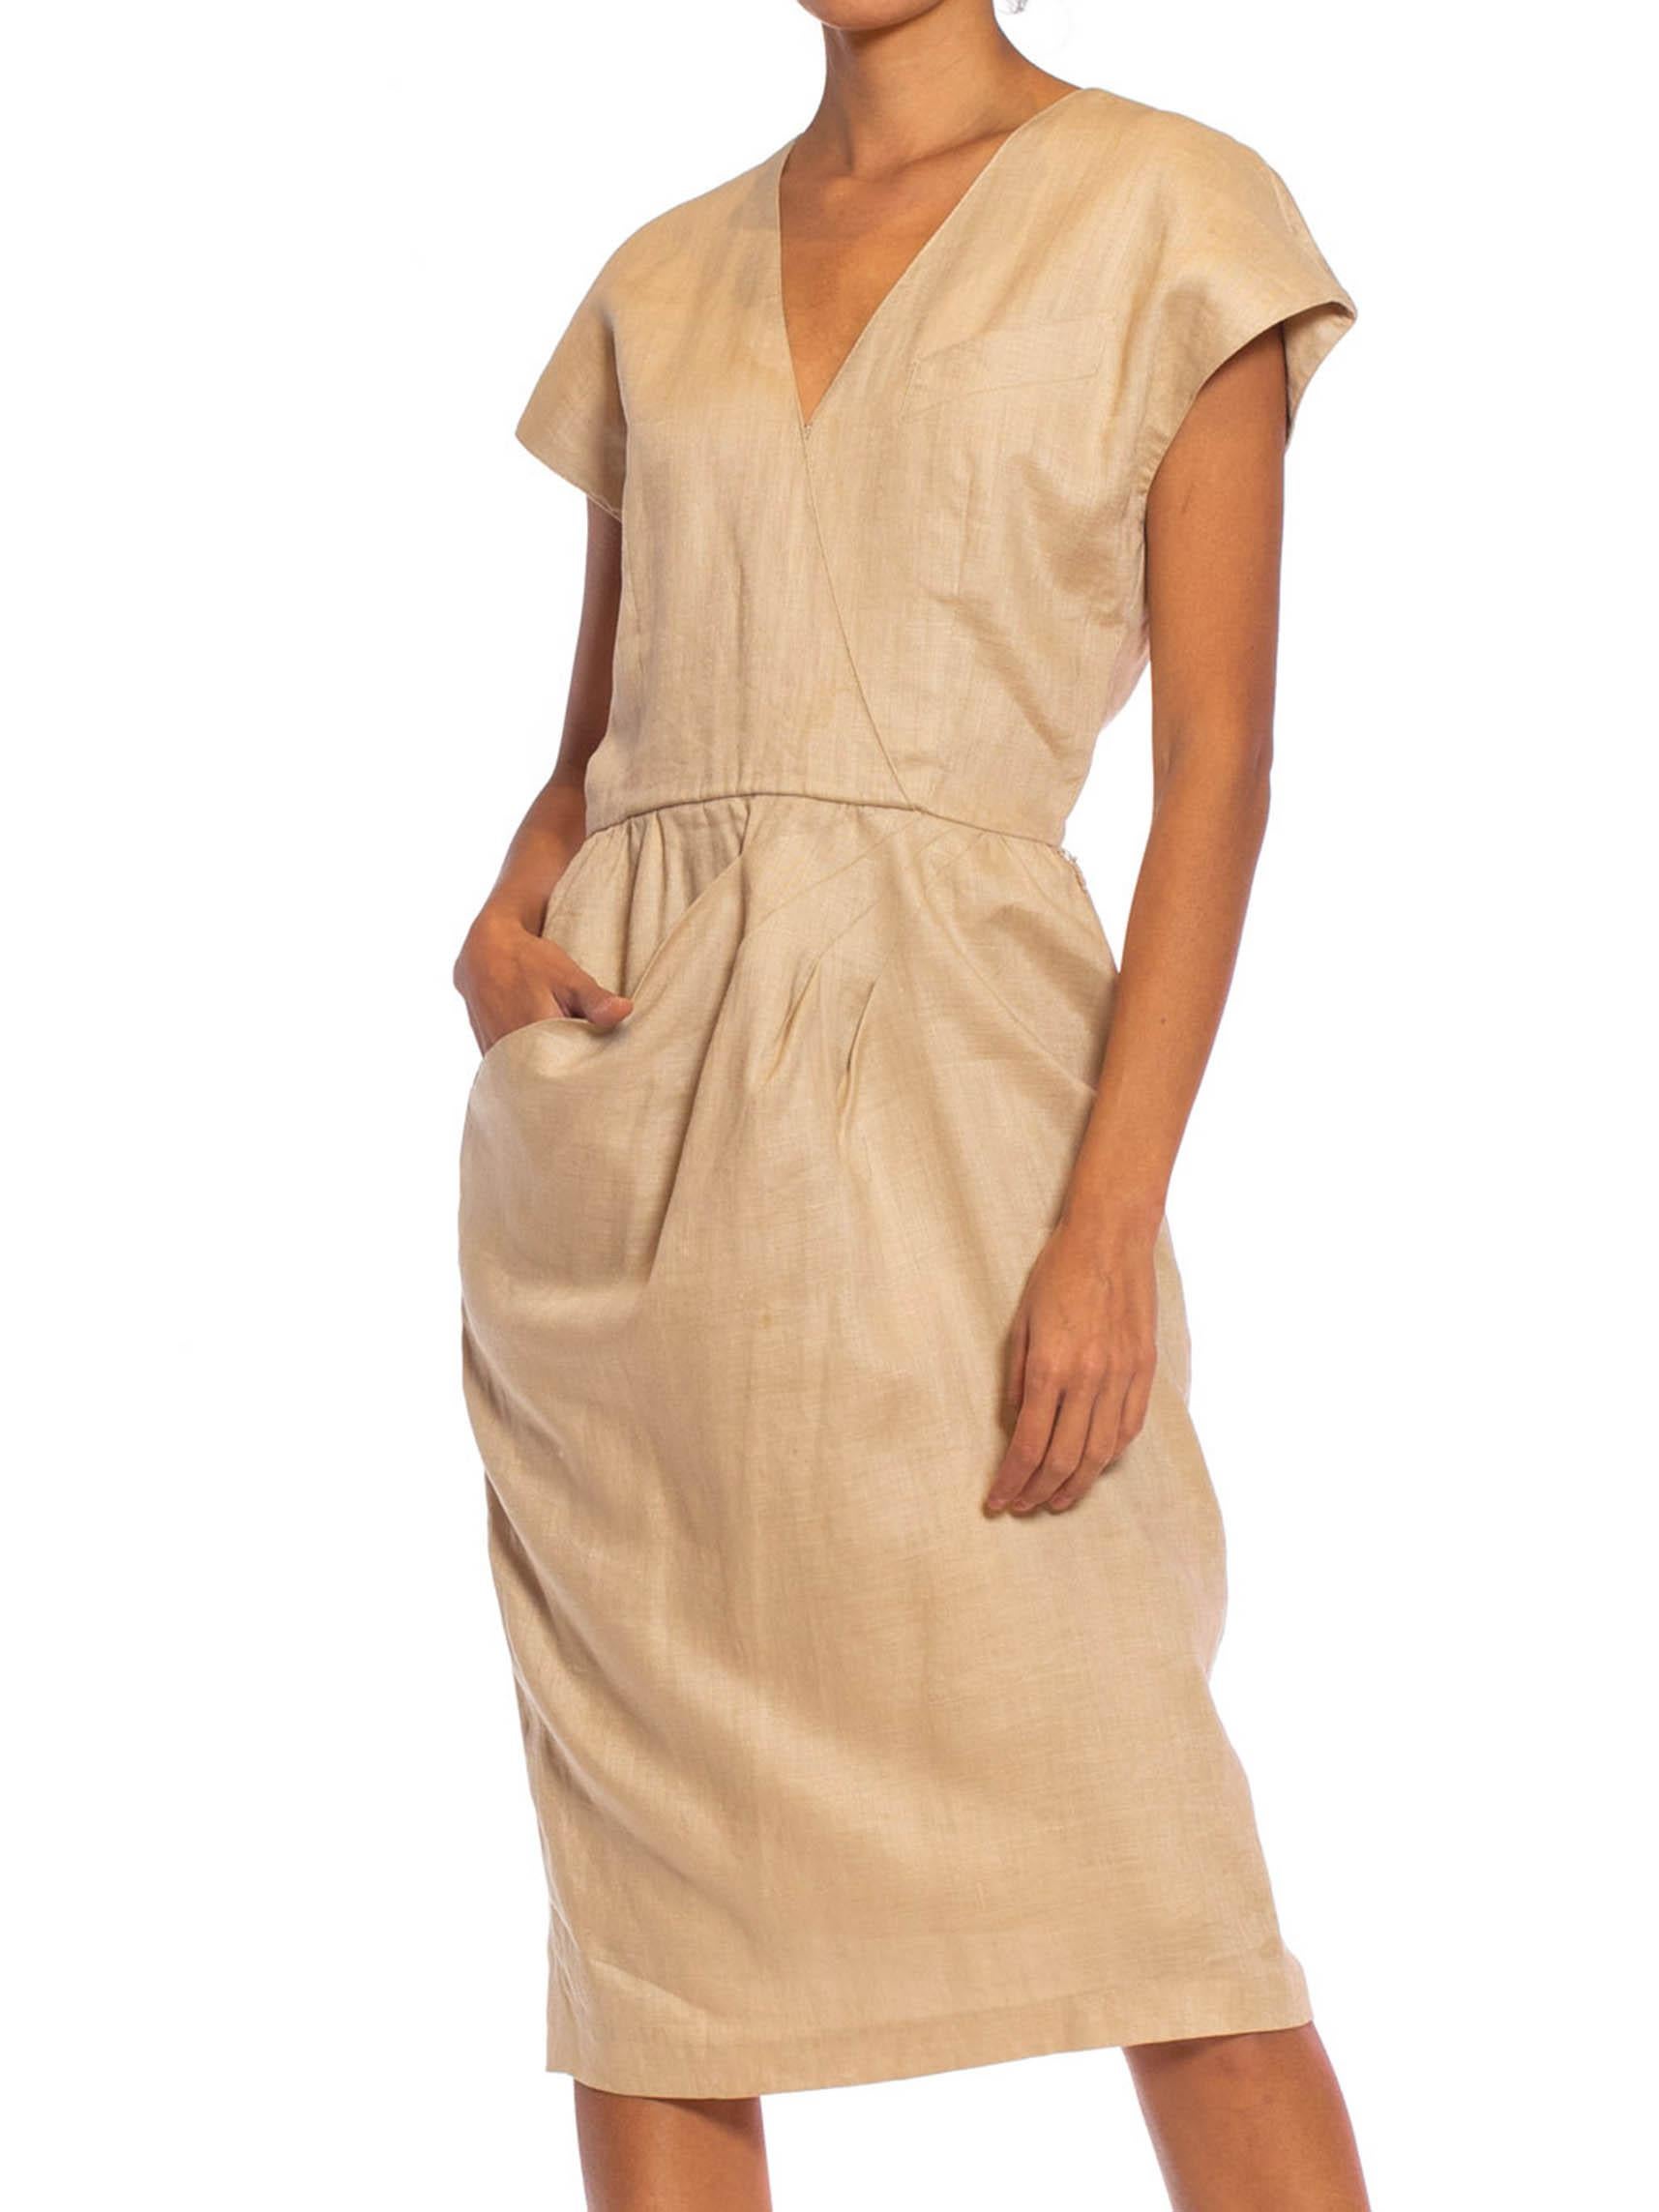 1980S Beige Linen Blend Dress Lined In Rayon For Sale 3